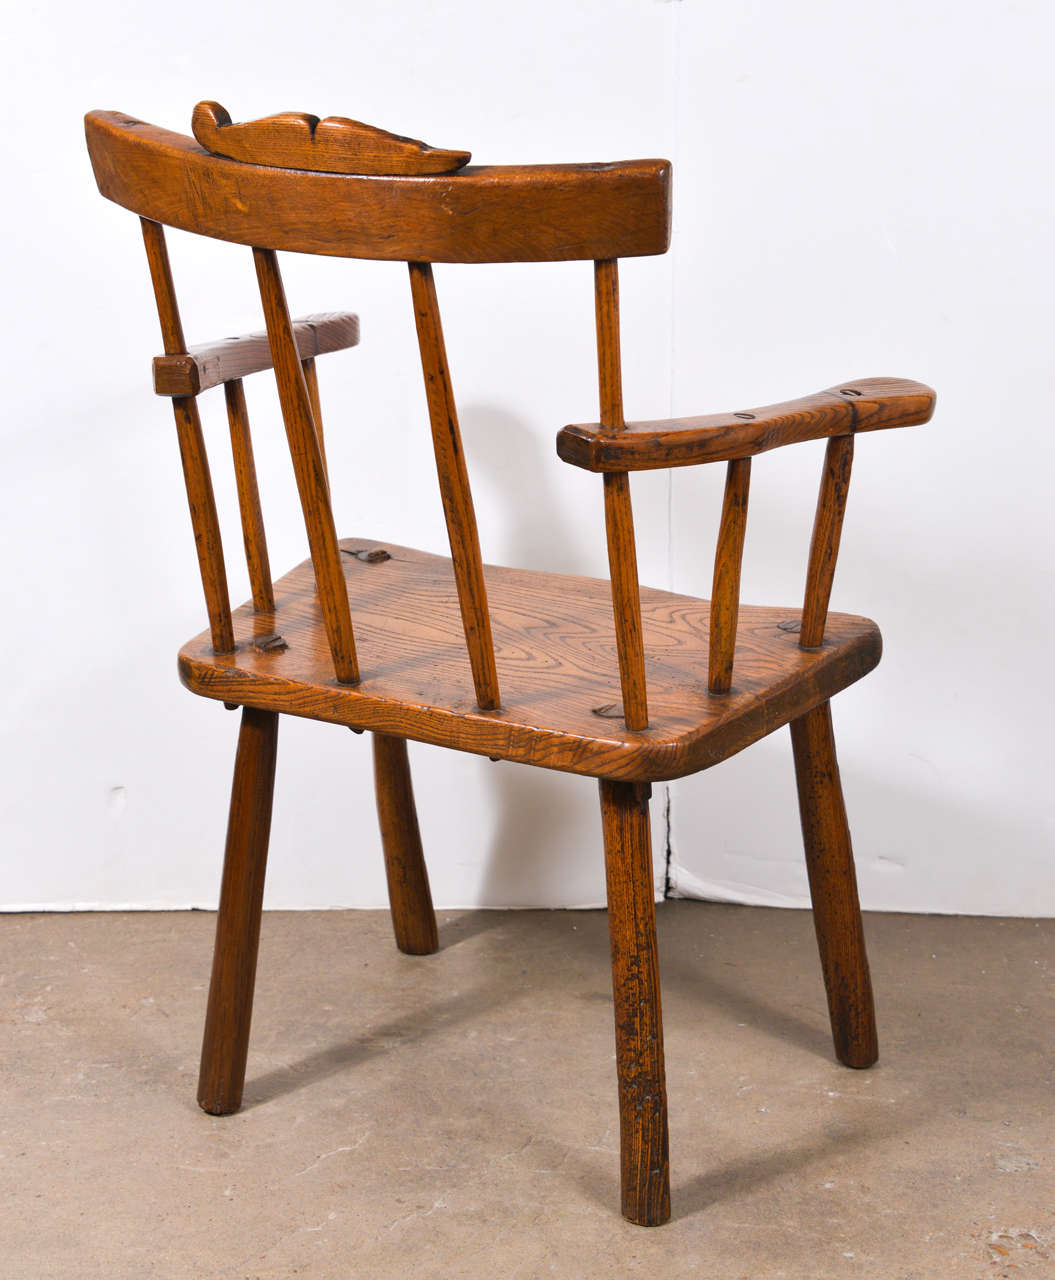 English Primitive 18th Century Folk Art Chair For Sale